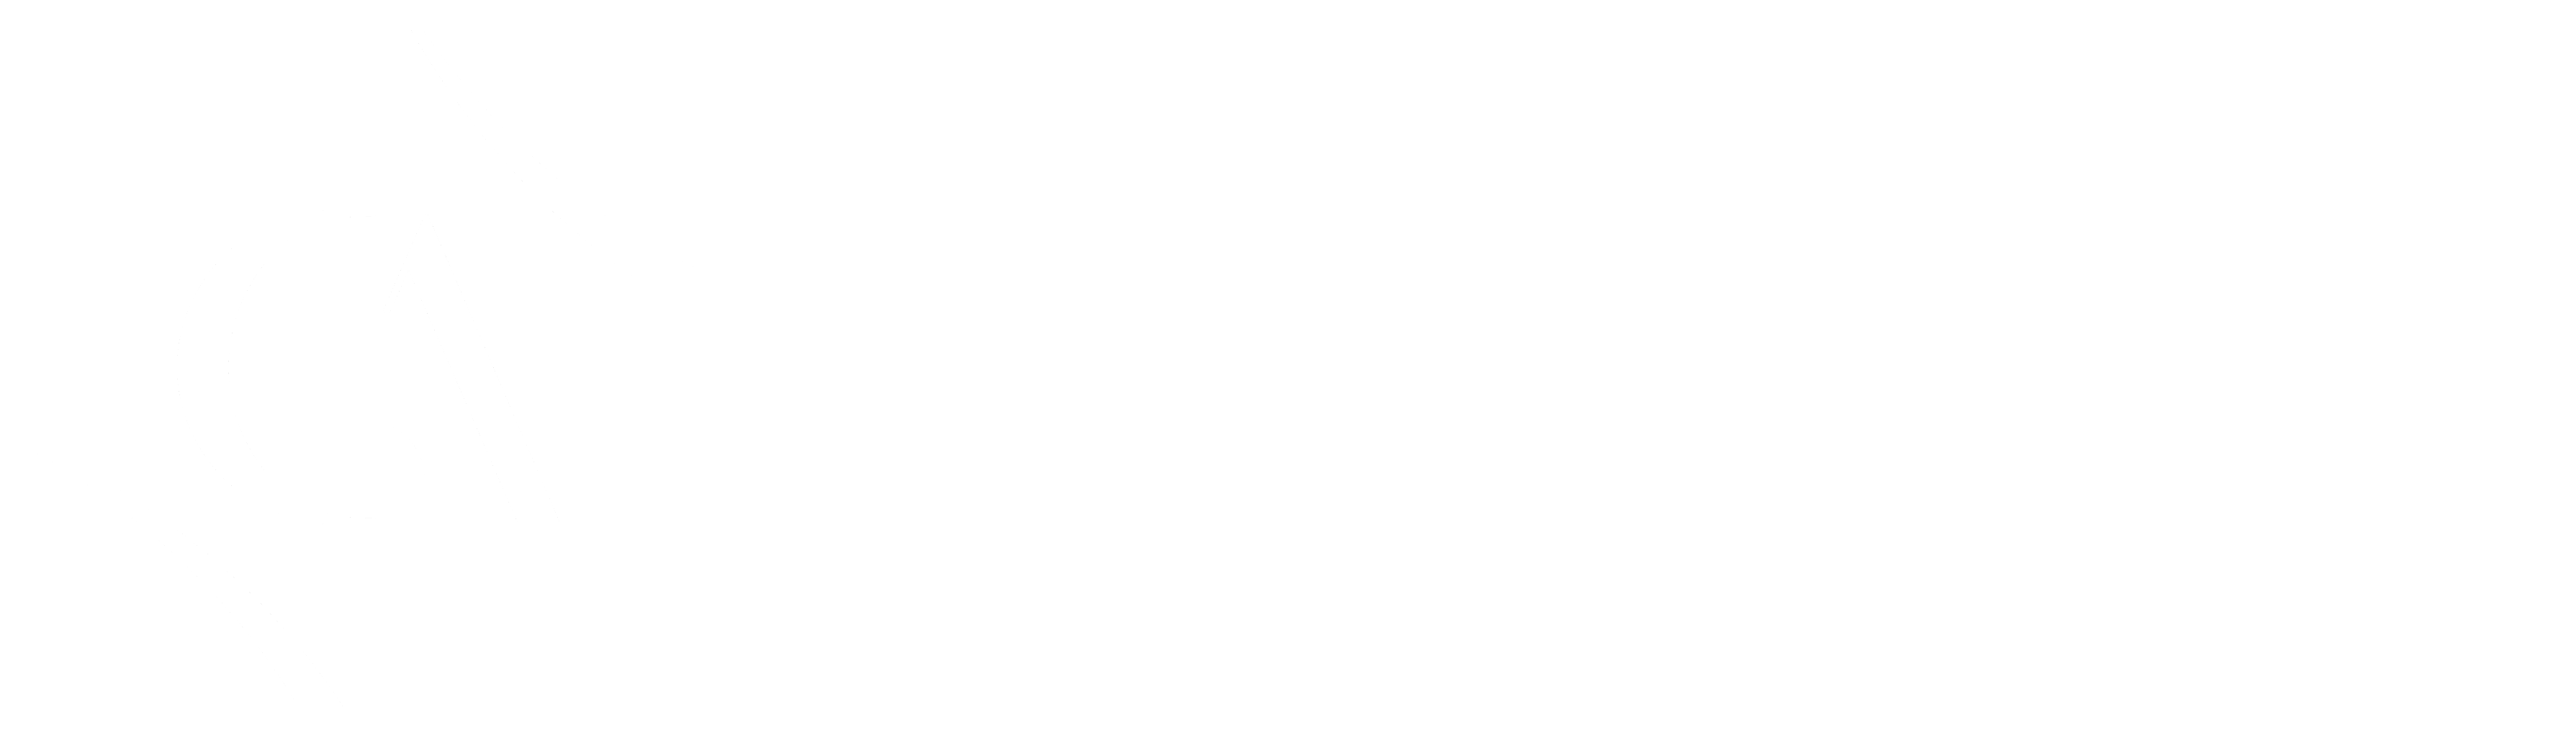 Global Agent Tennis Academy Shop